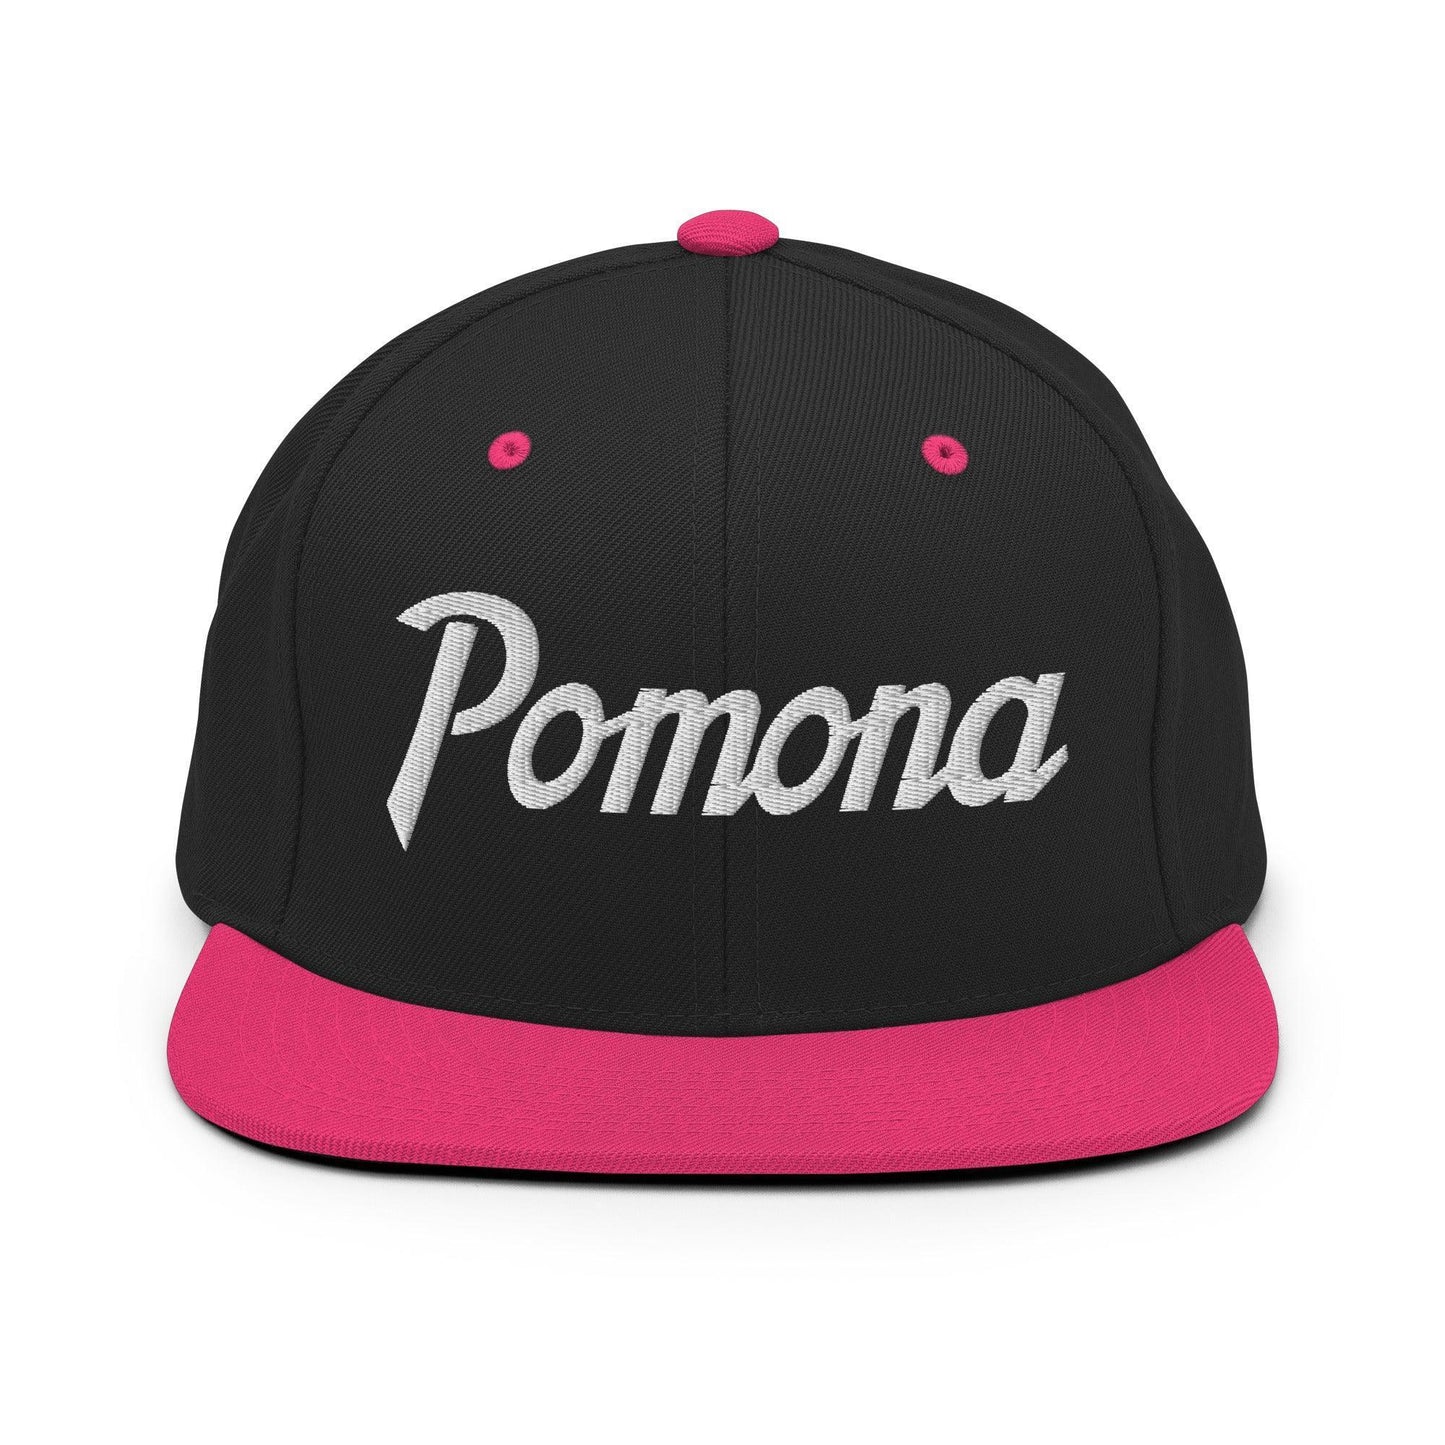 Pomona Snapback Hat Black Neon Pink